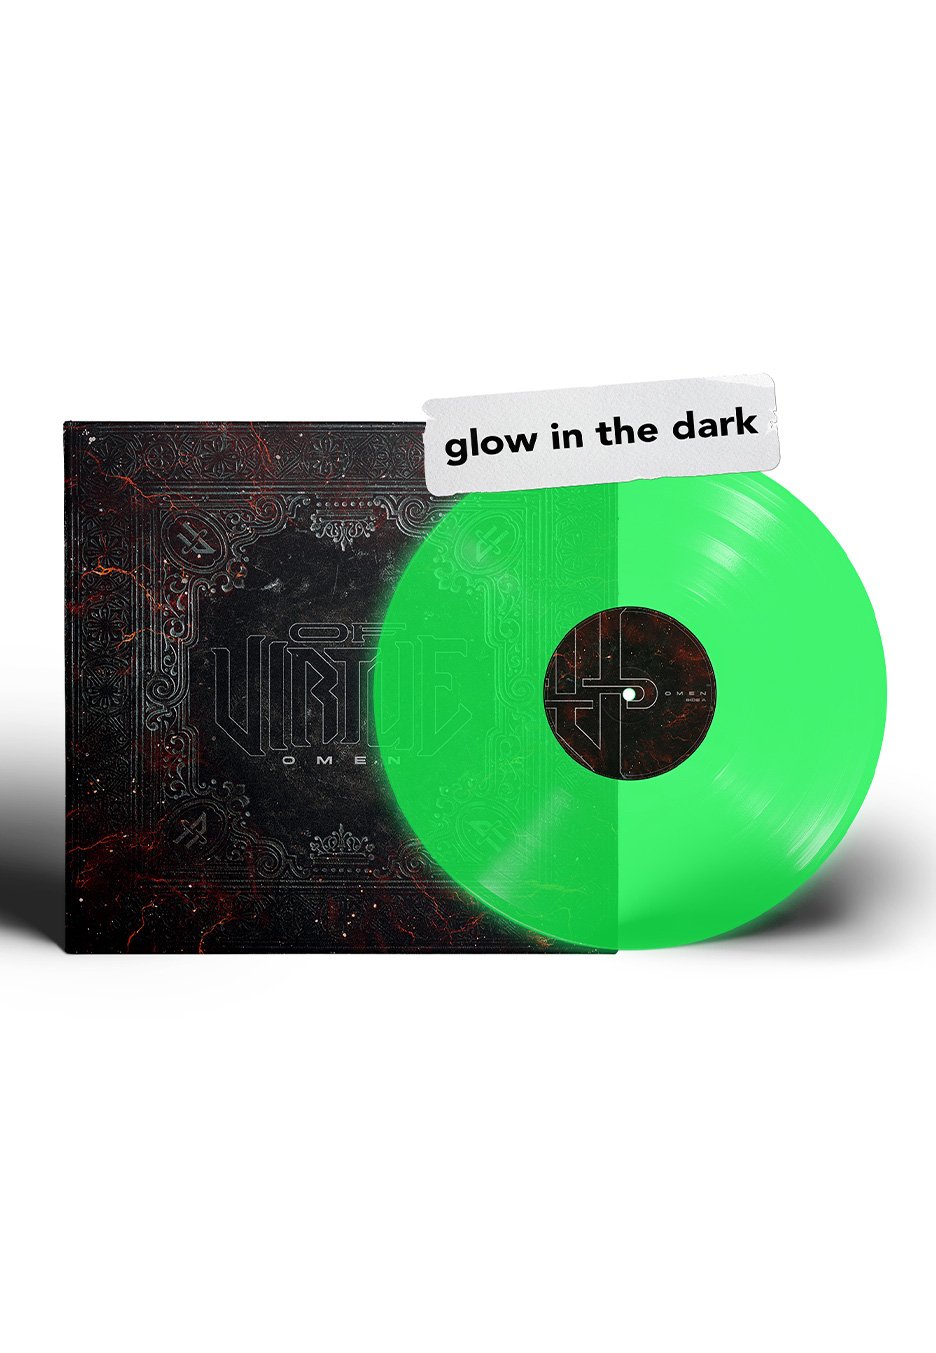 of Virtue - Omen (Ltd. Glow in The Dark LP)